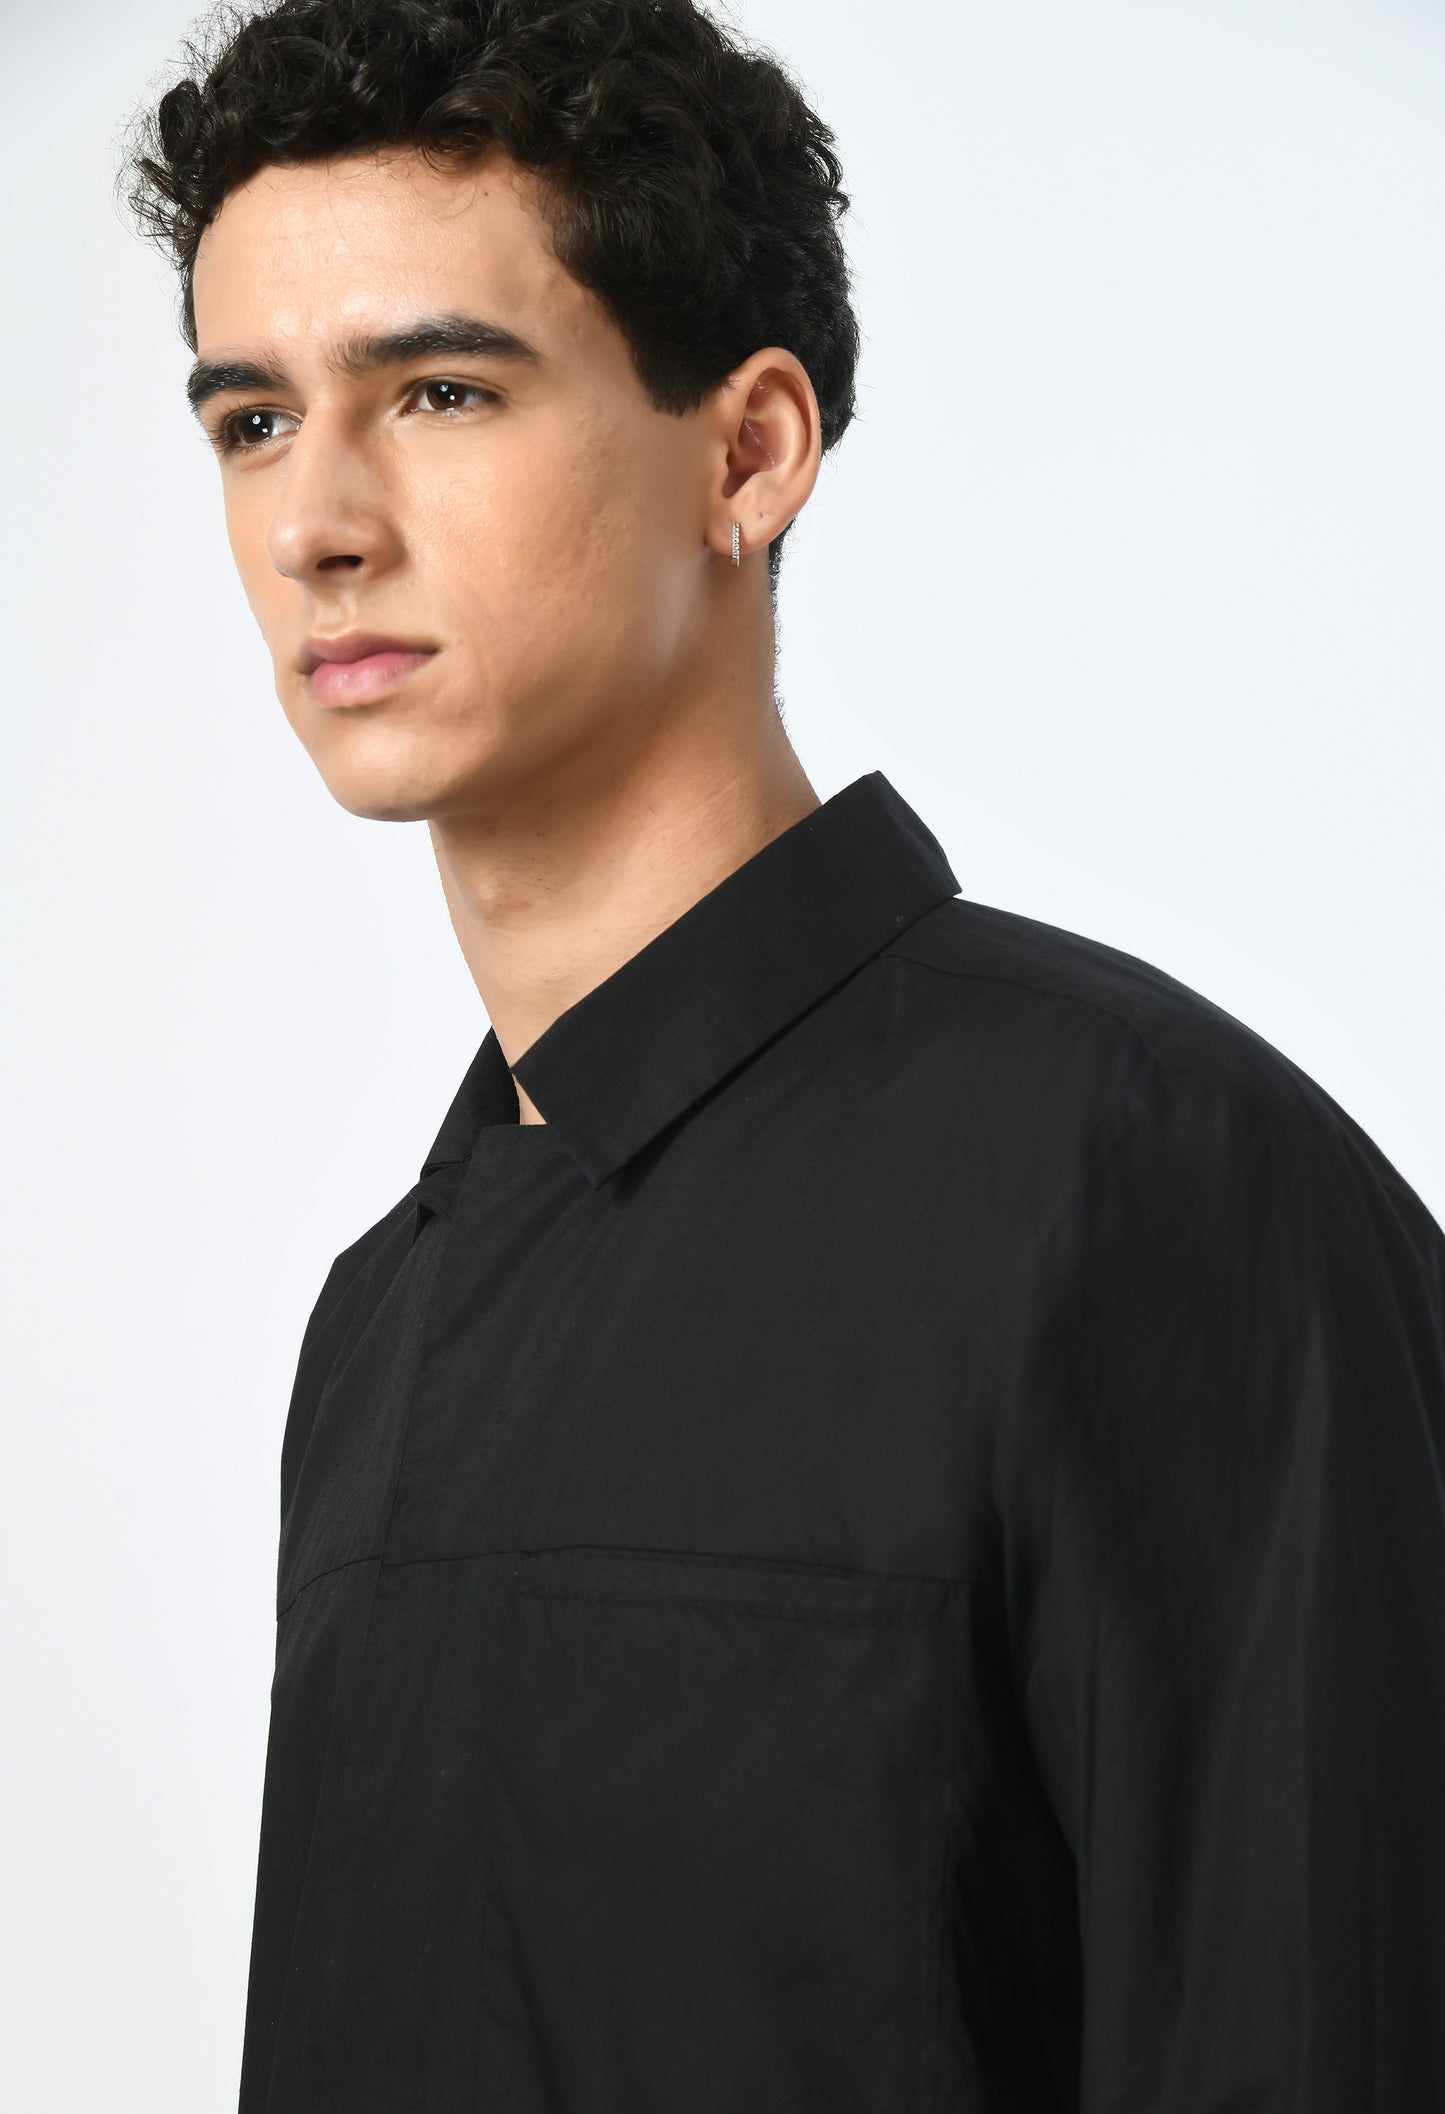 Black men's cotton shirt with a classic collar.